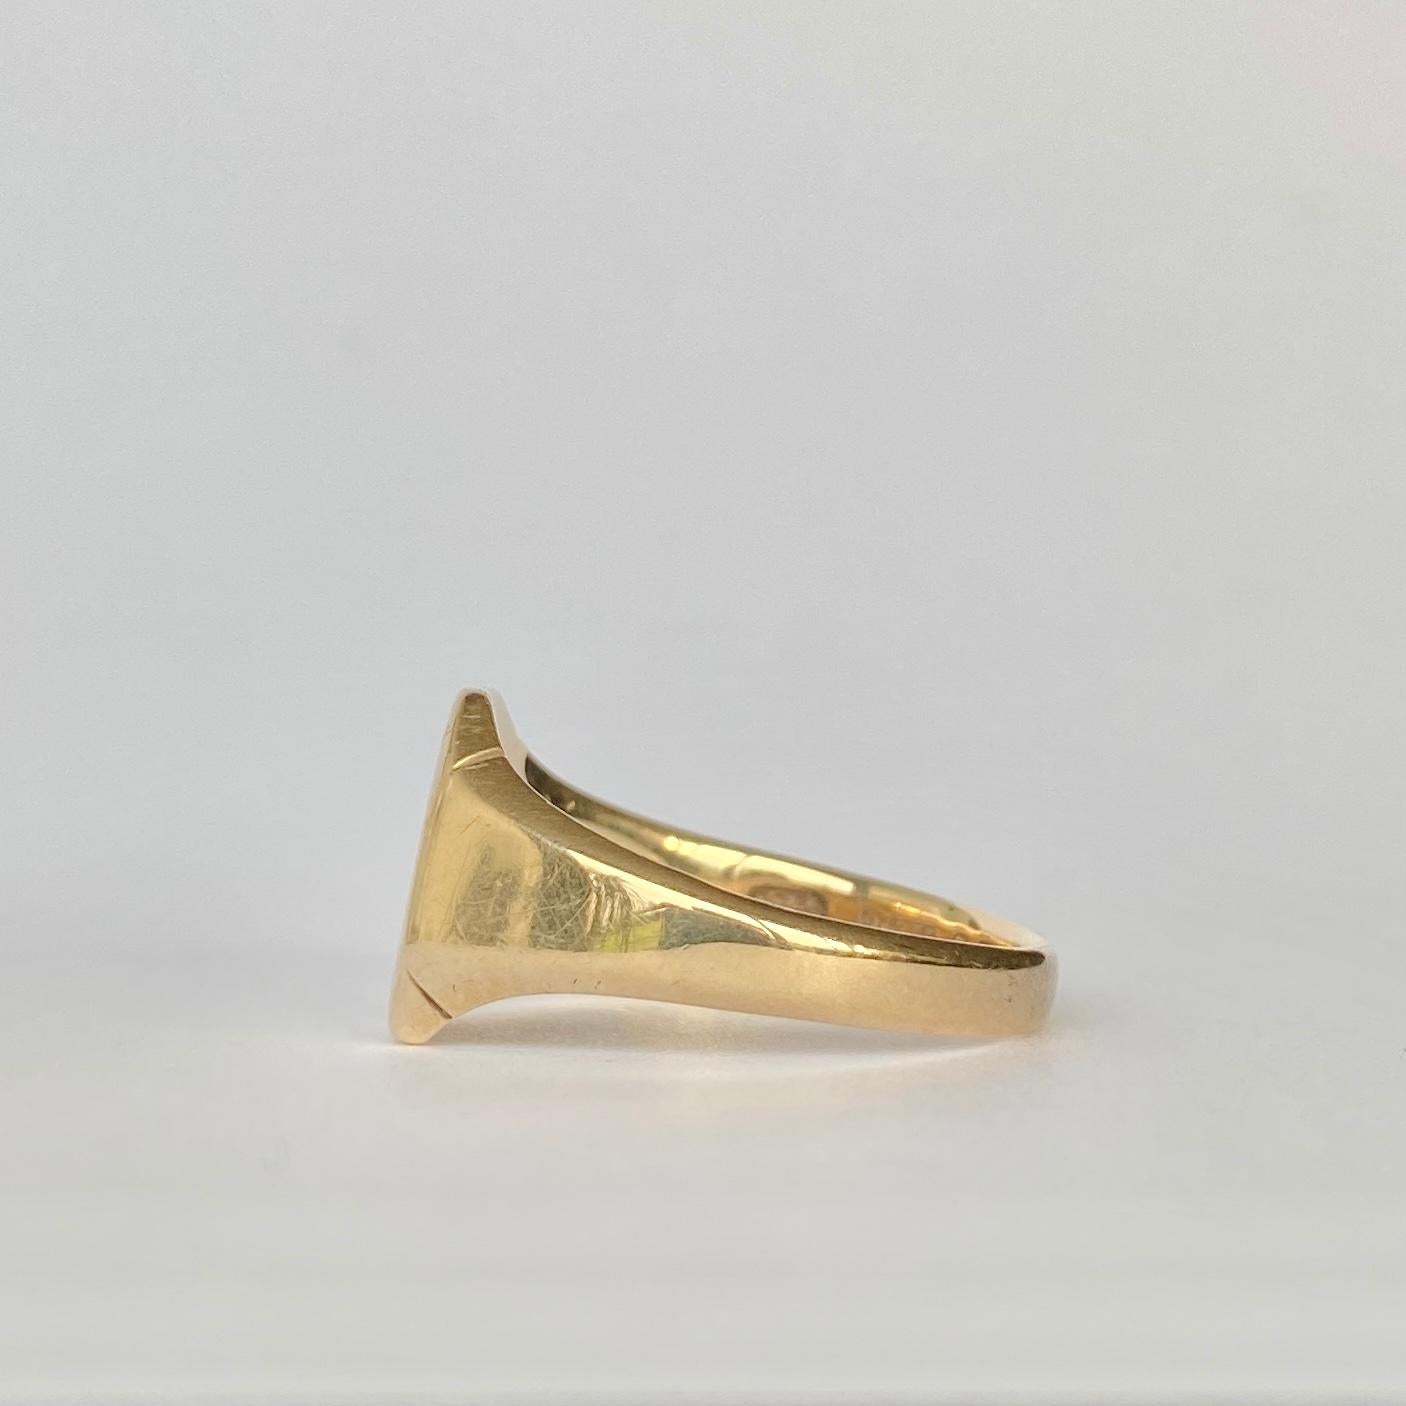 Modern Vintage 9 Carat Gold Signet Ring